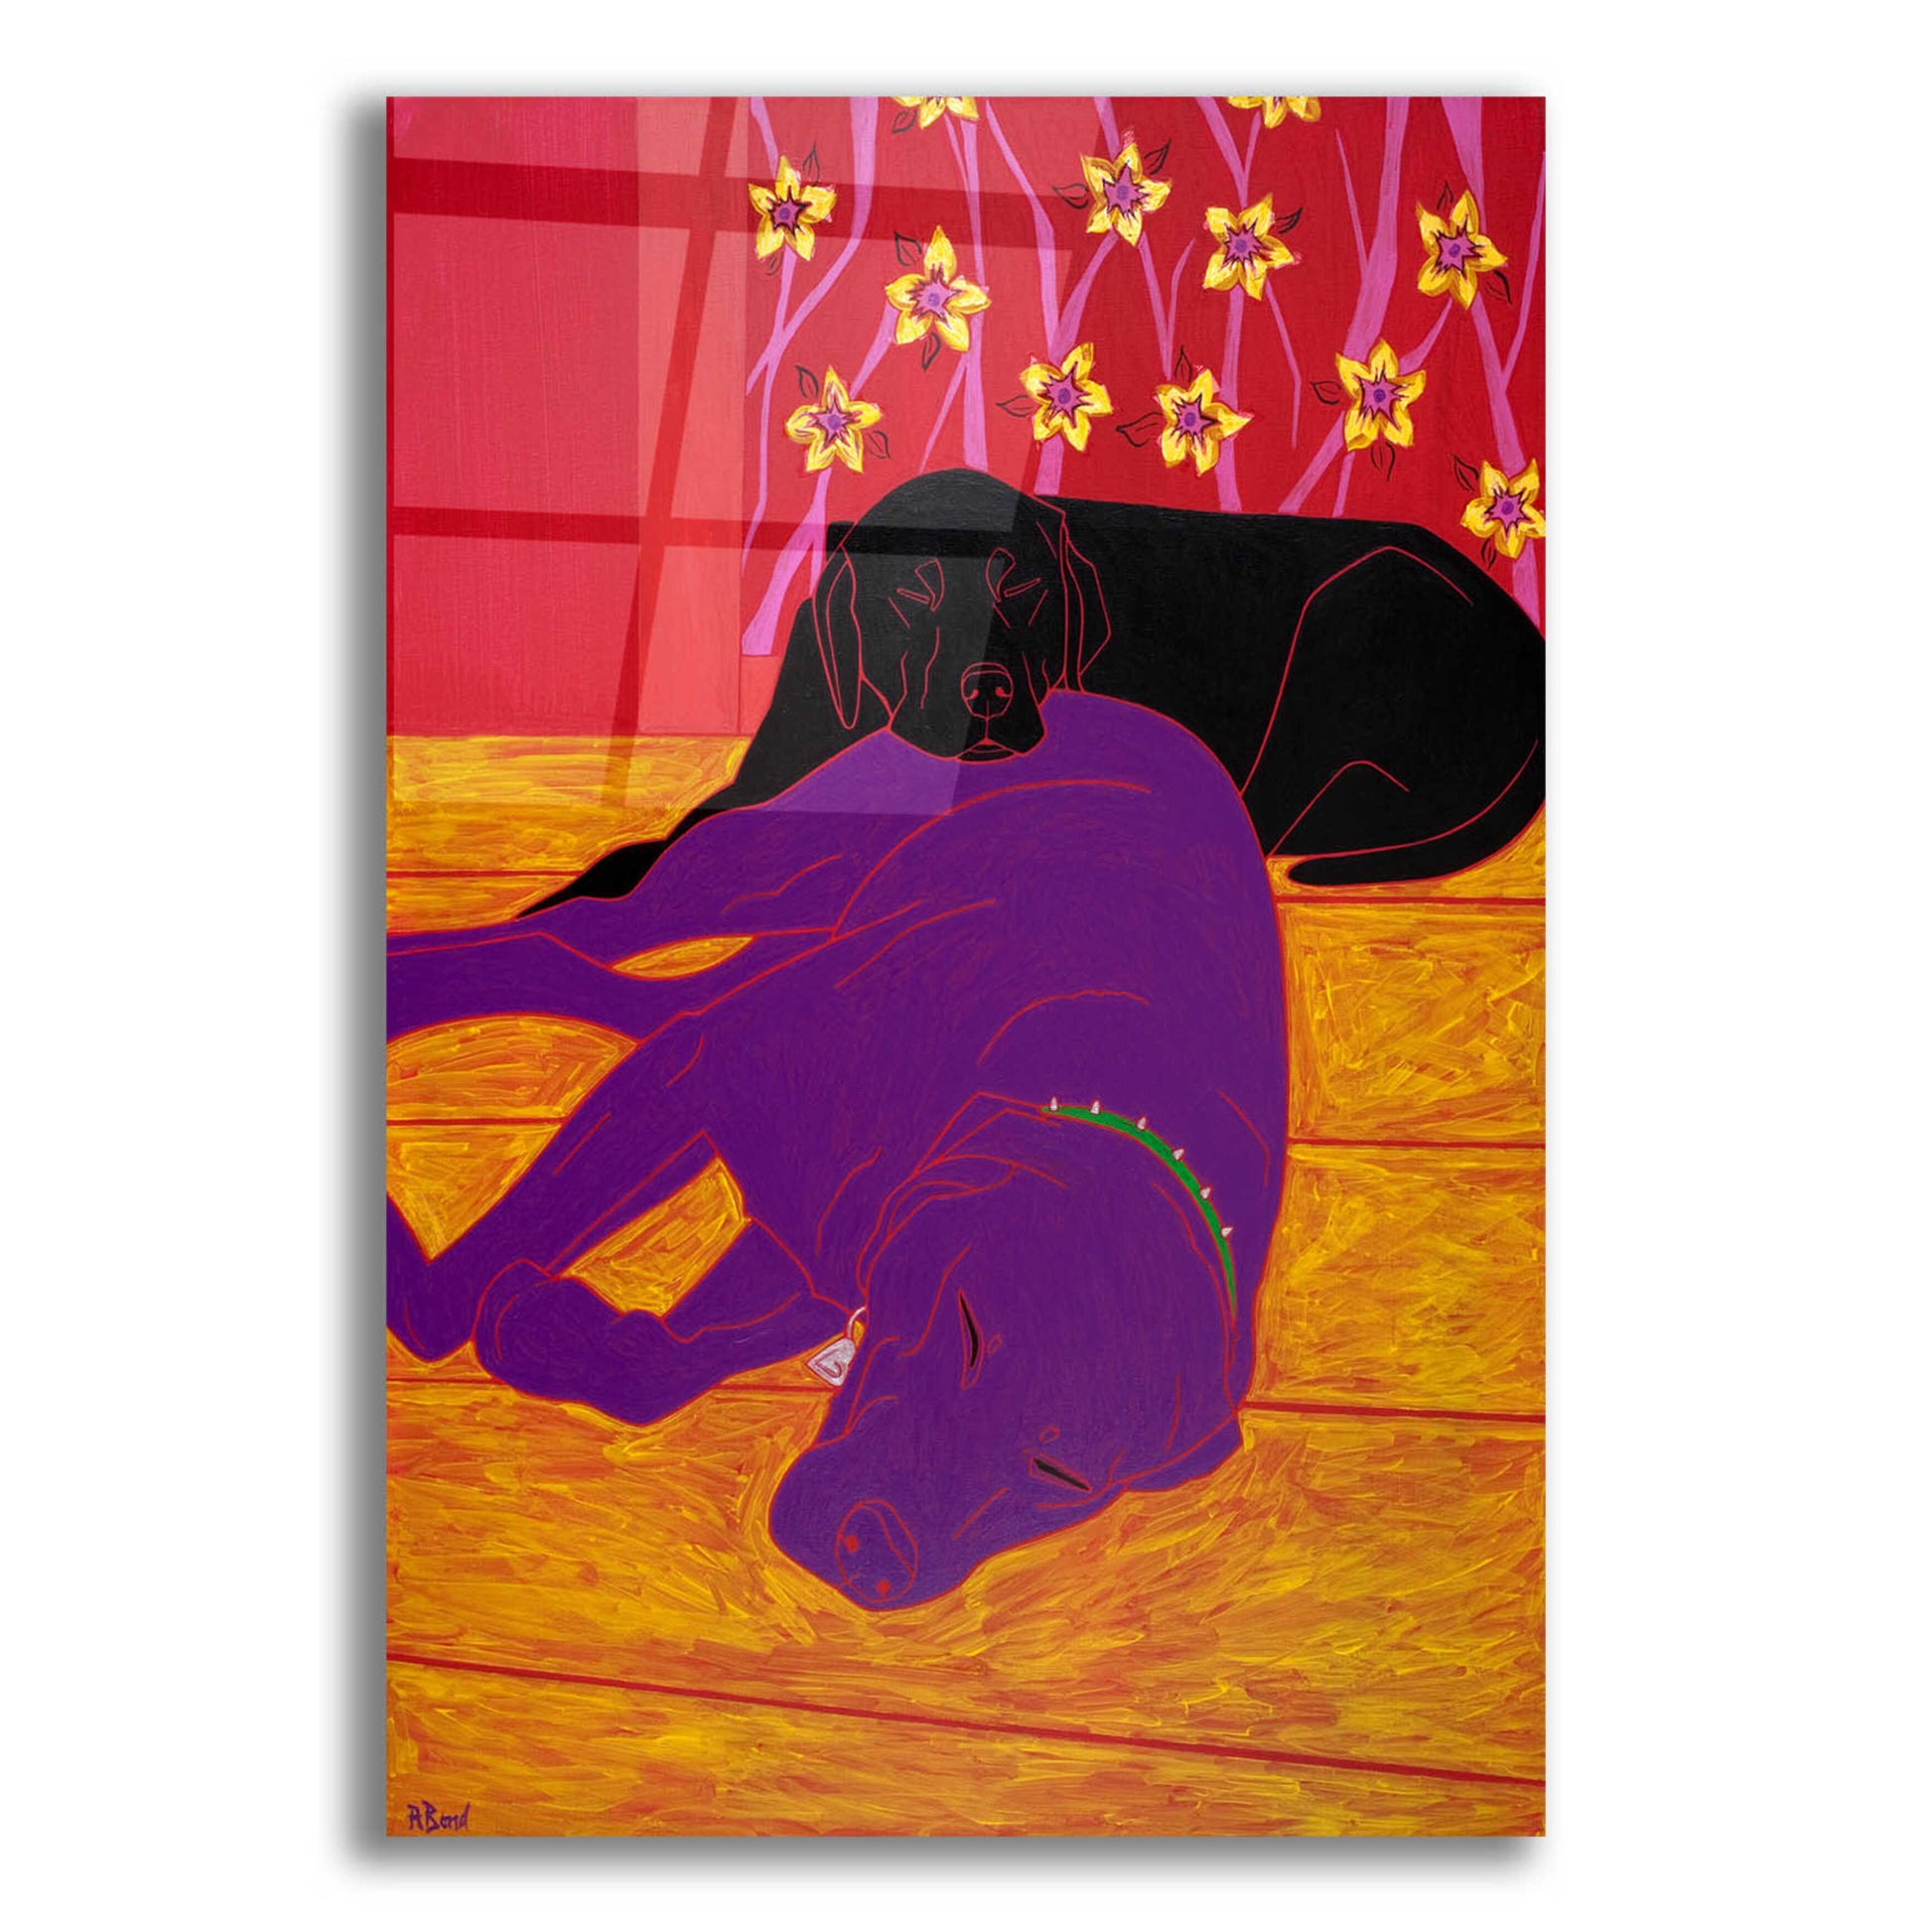 Epic Art 'Let Sleeping Dogs Lie' by Angela Bond Acrylic Glass Wall Art,12x16